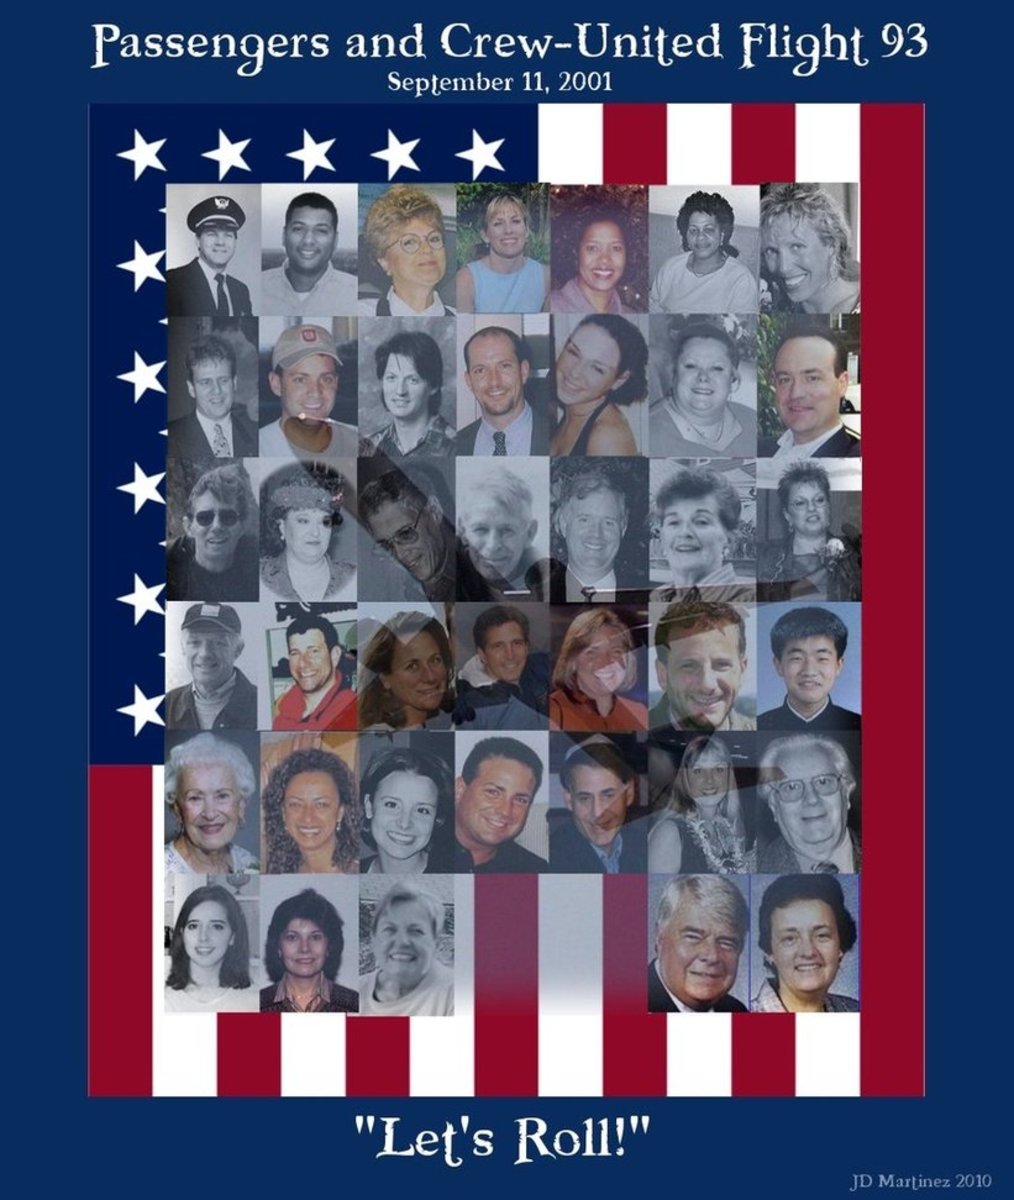 The Heroes of Flight 93